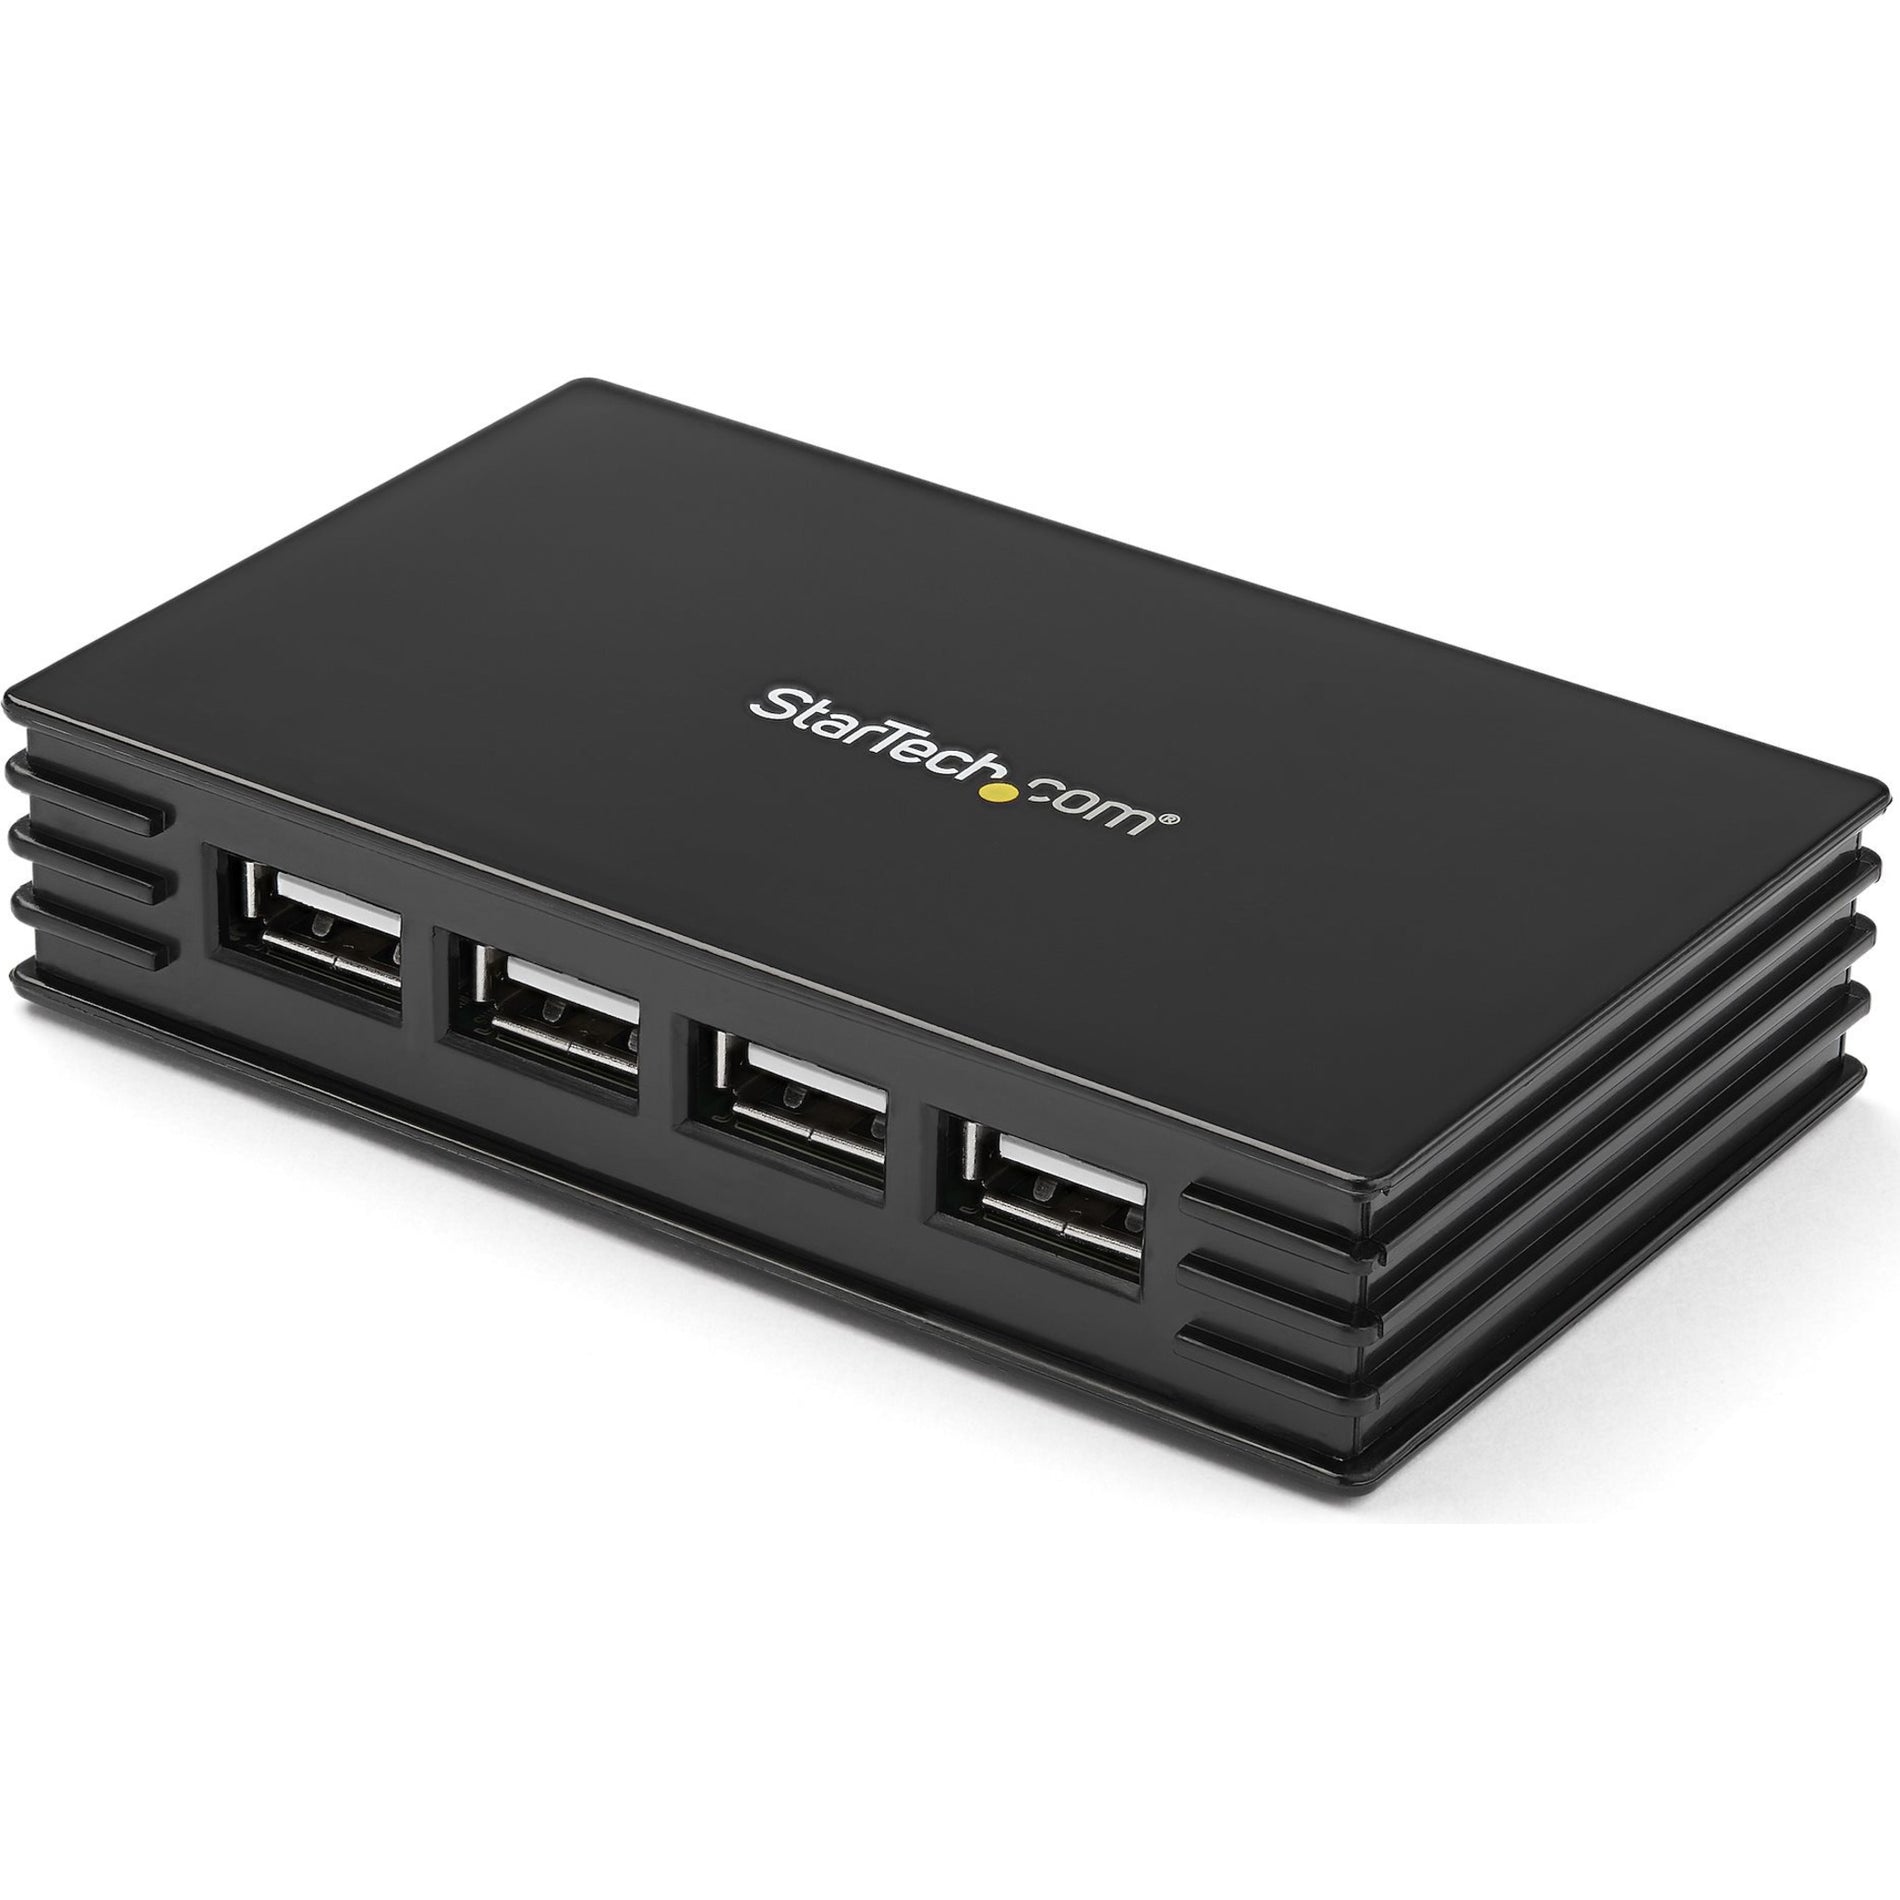 StarTech.com ST7202USB 7 Port USB 2.0 Hub - Hi-Speed USB, Expand Your Connectivity